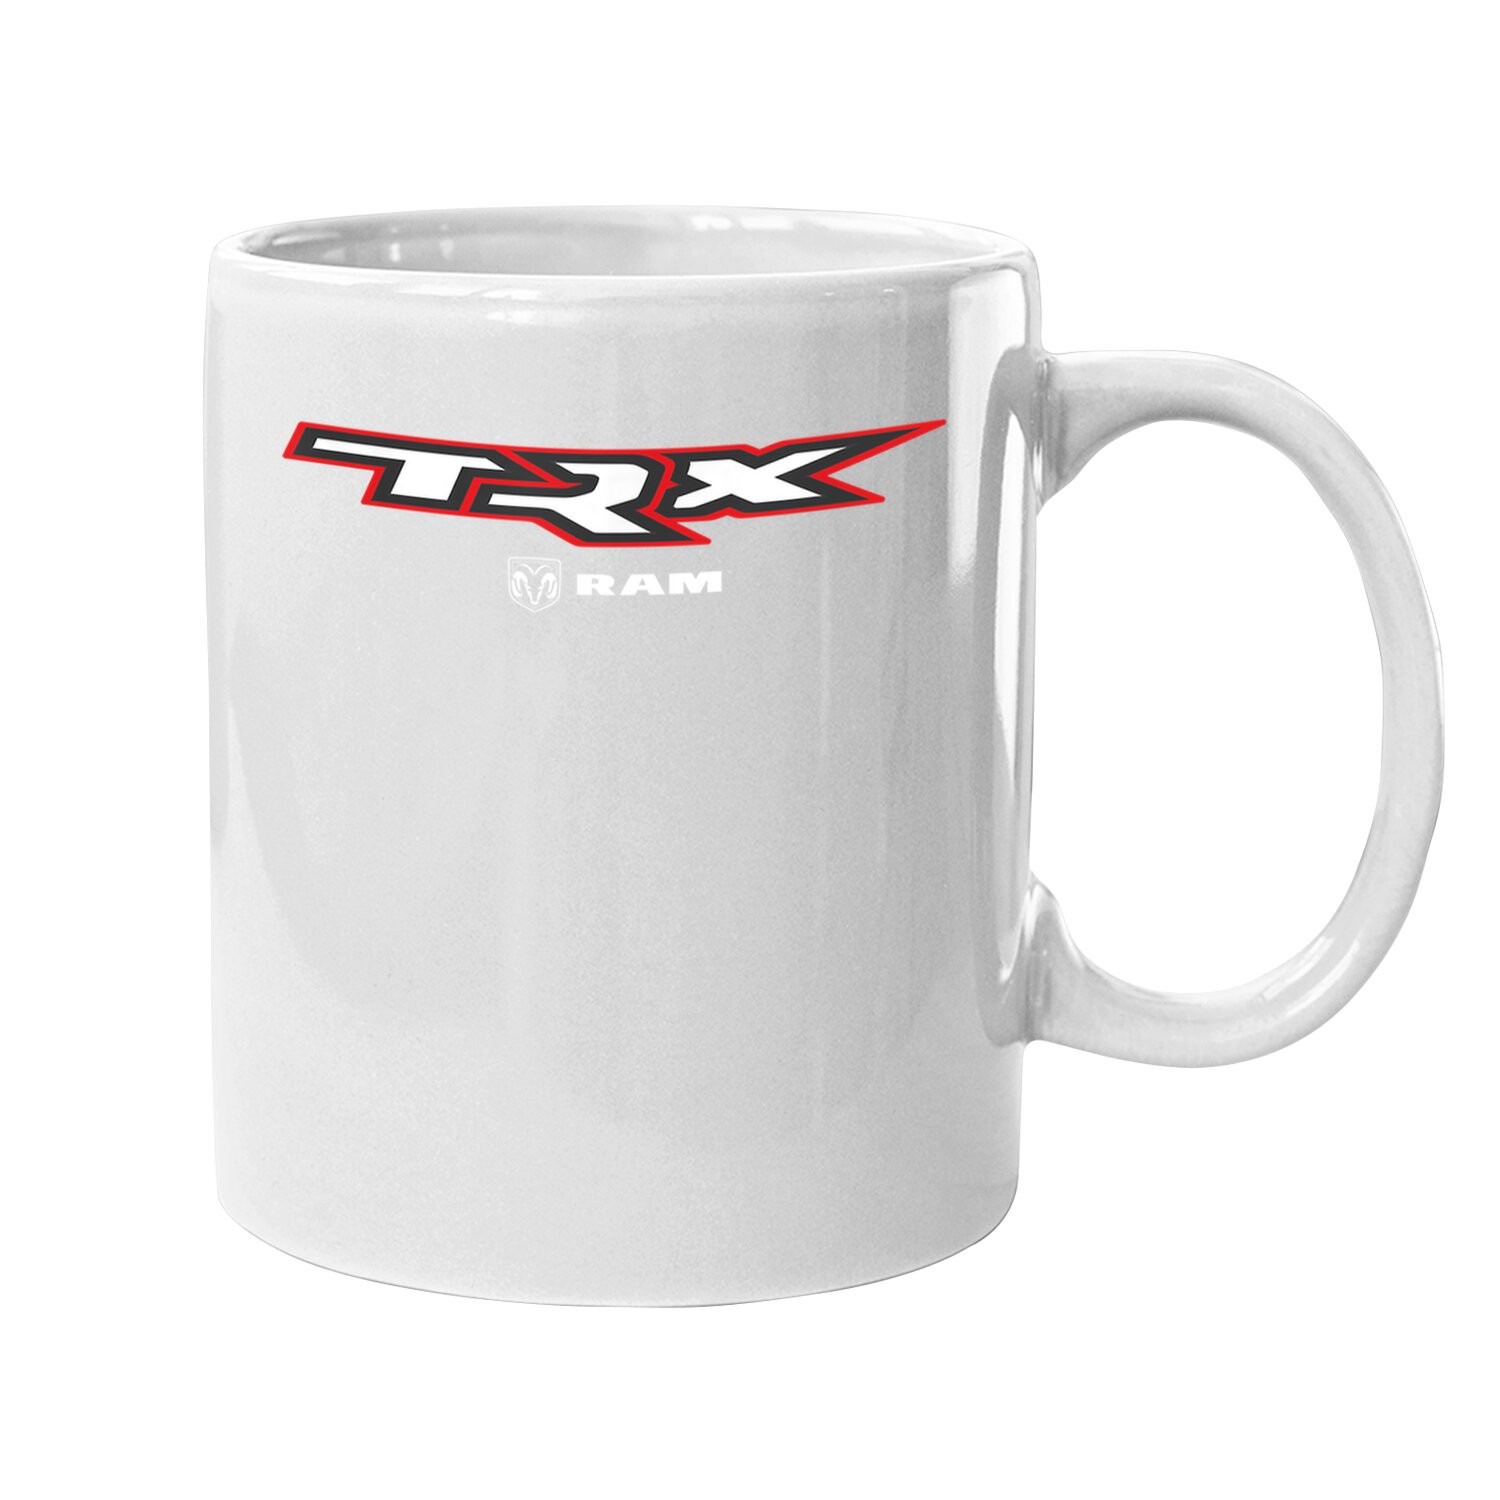 Ram Trucks Trx Coffee Mug